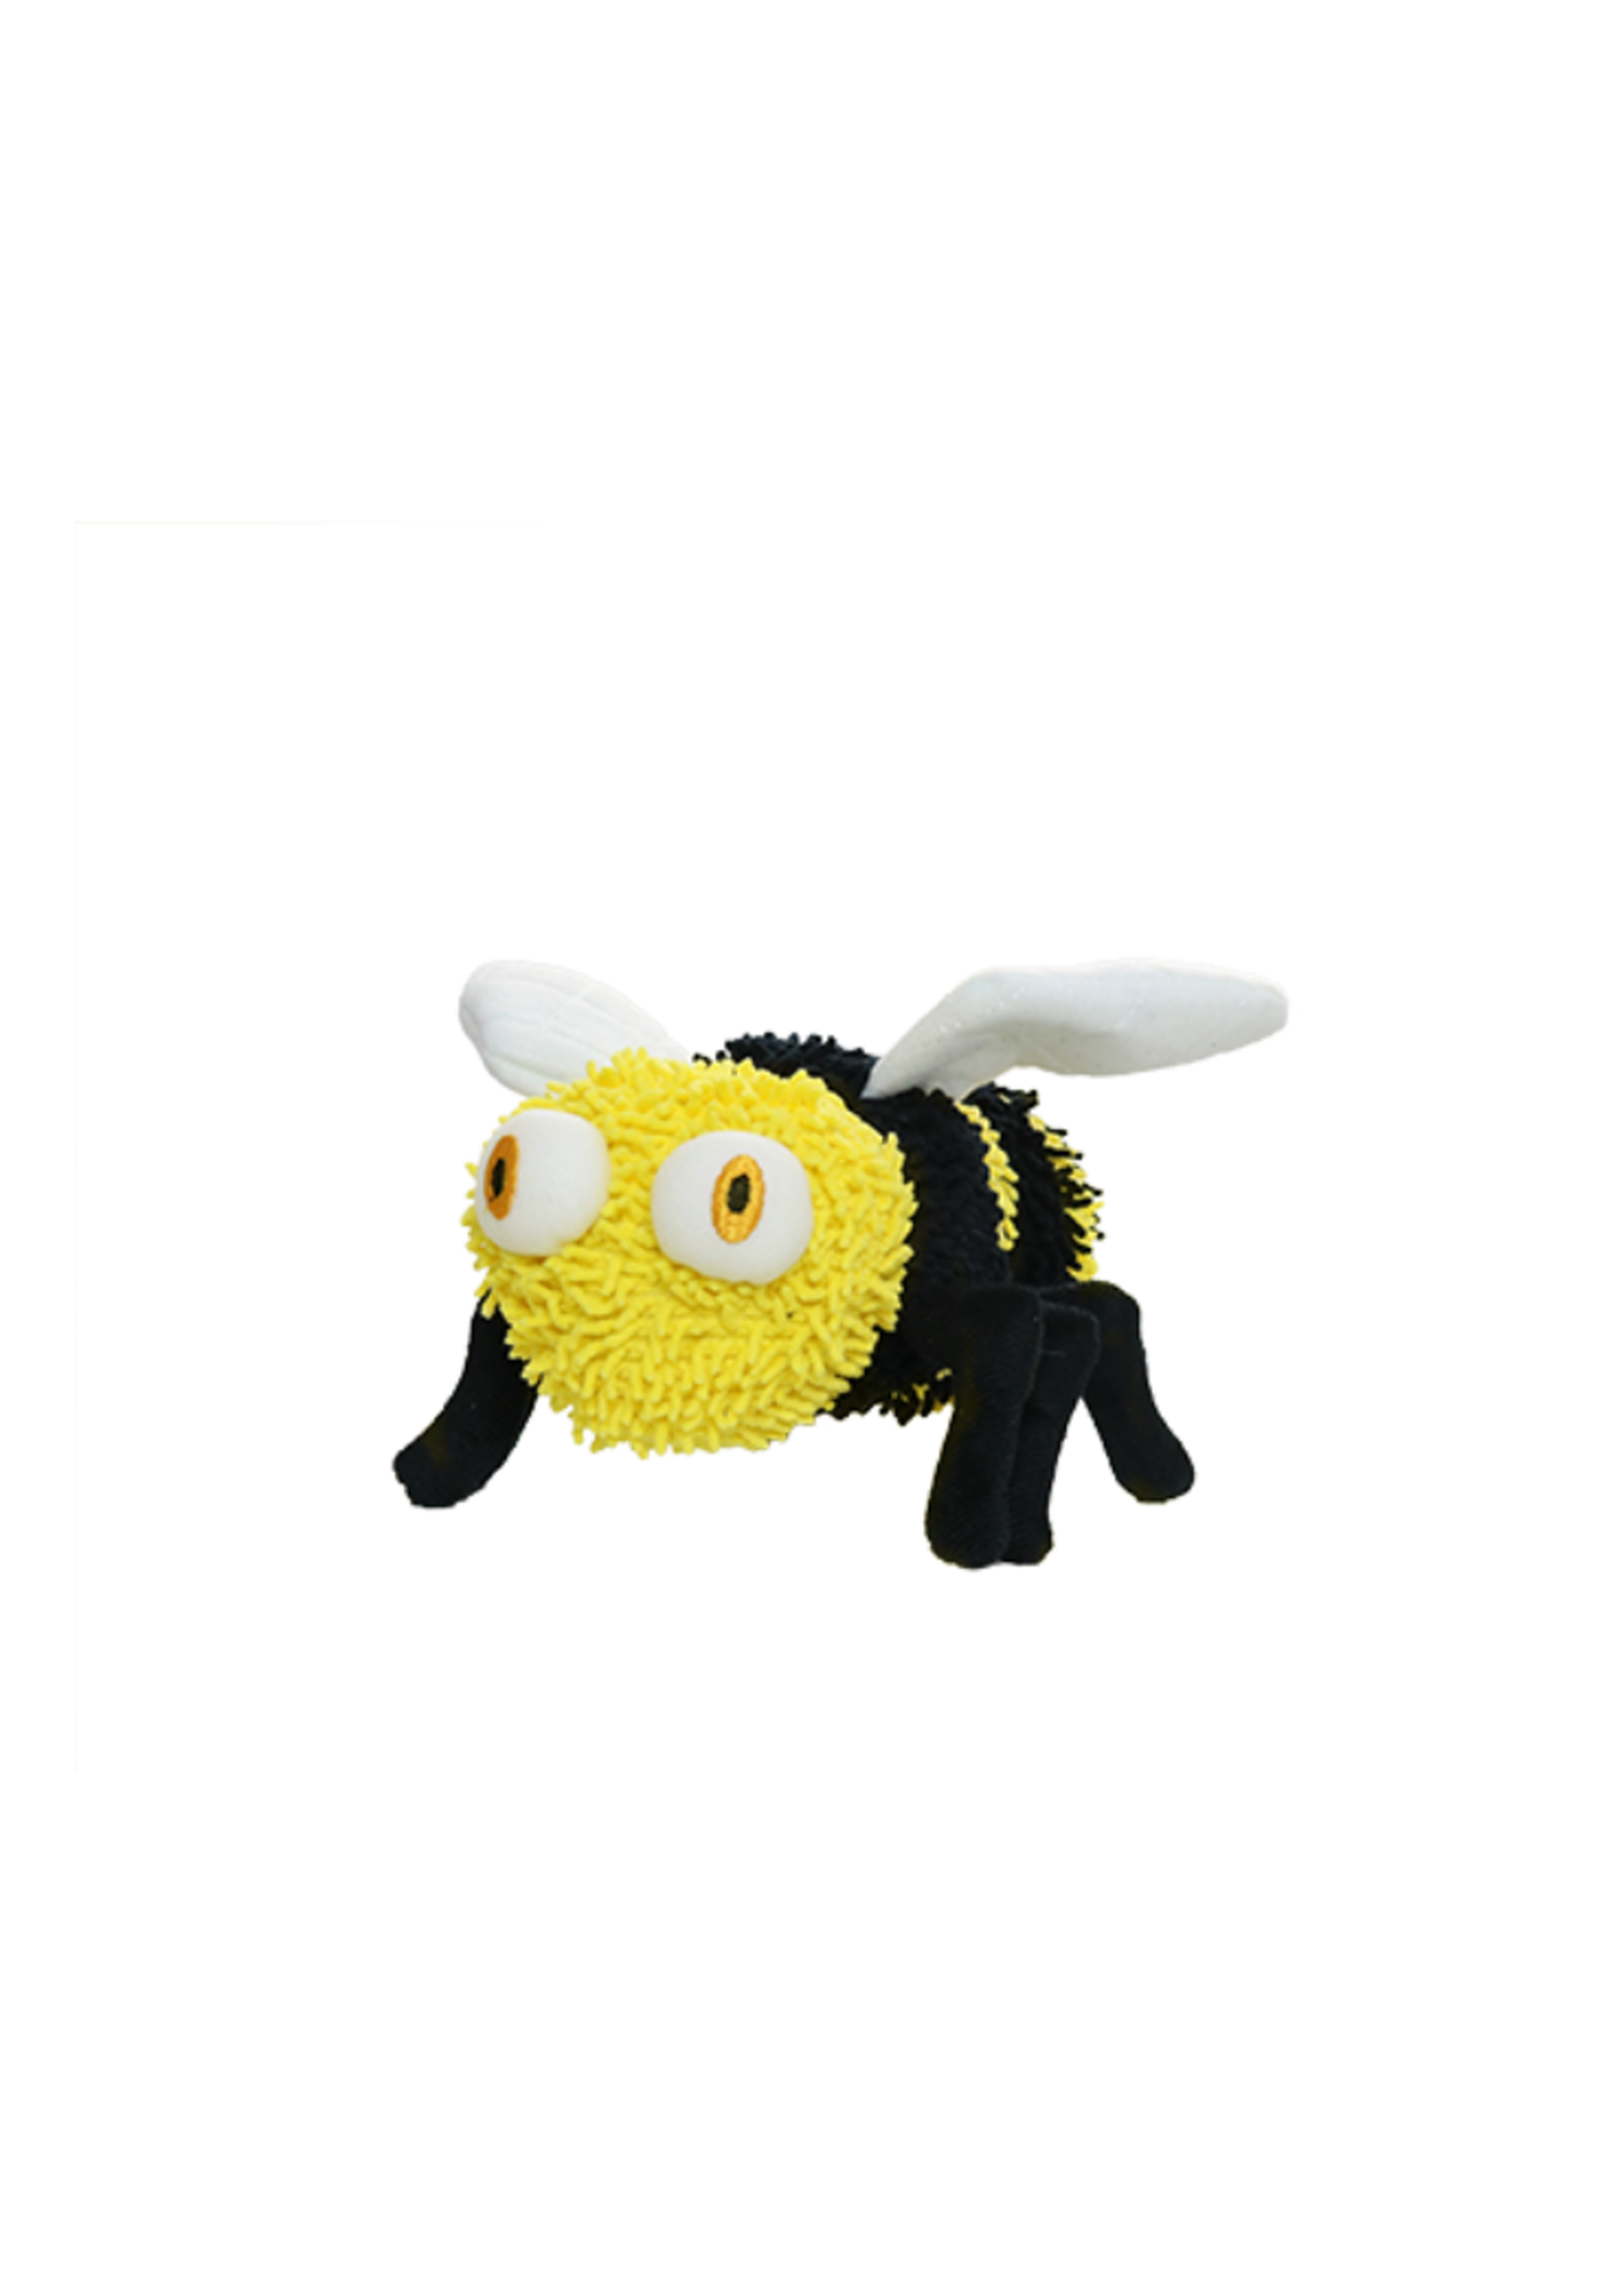 Tuffy VIP Mighty Microfiber Ball Medium Bee